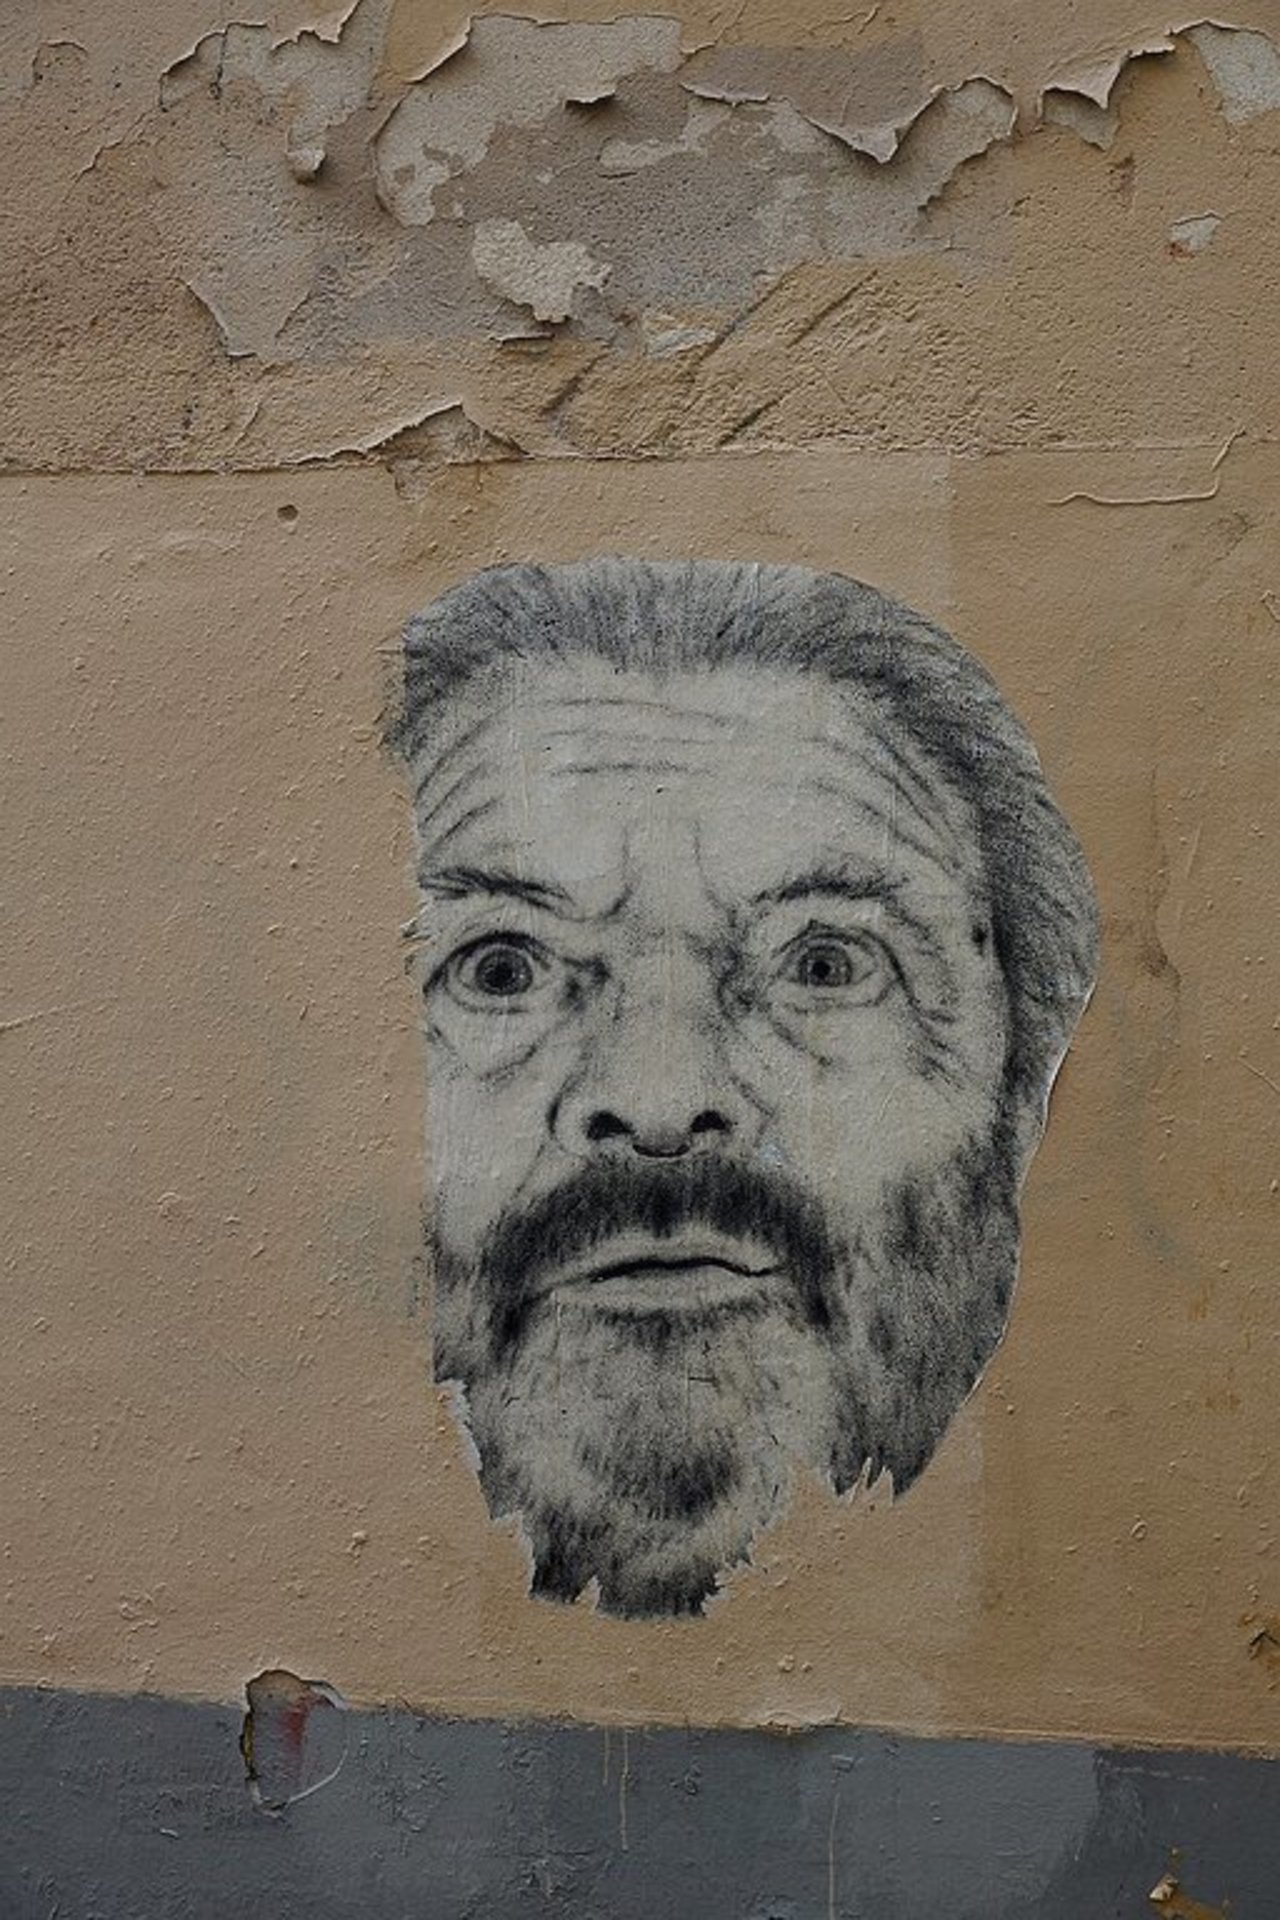 Street Art by anonymous in #Paris http://www.urbacolors.com #art #mural #graffiti #streetart https://t.co/6q9Cy1TzxO